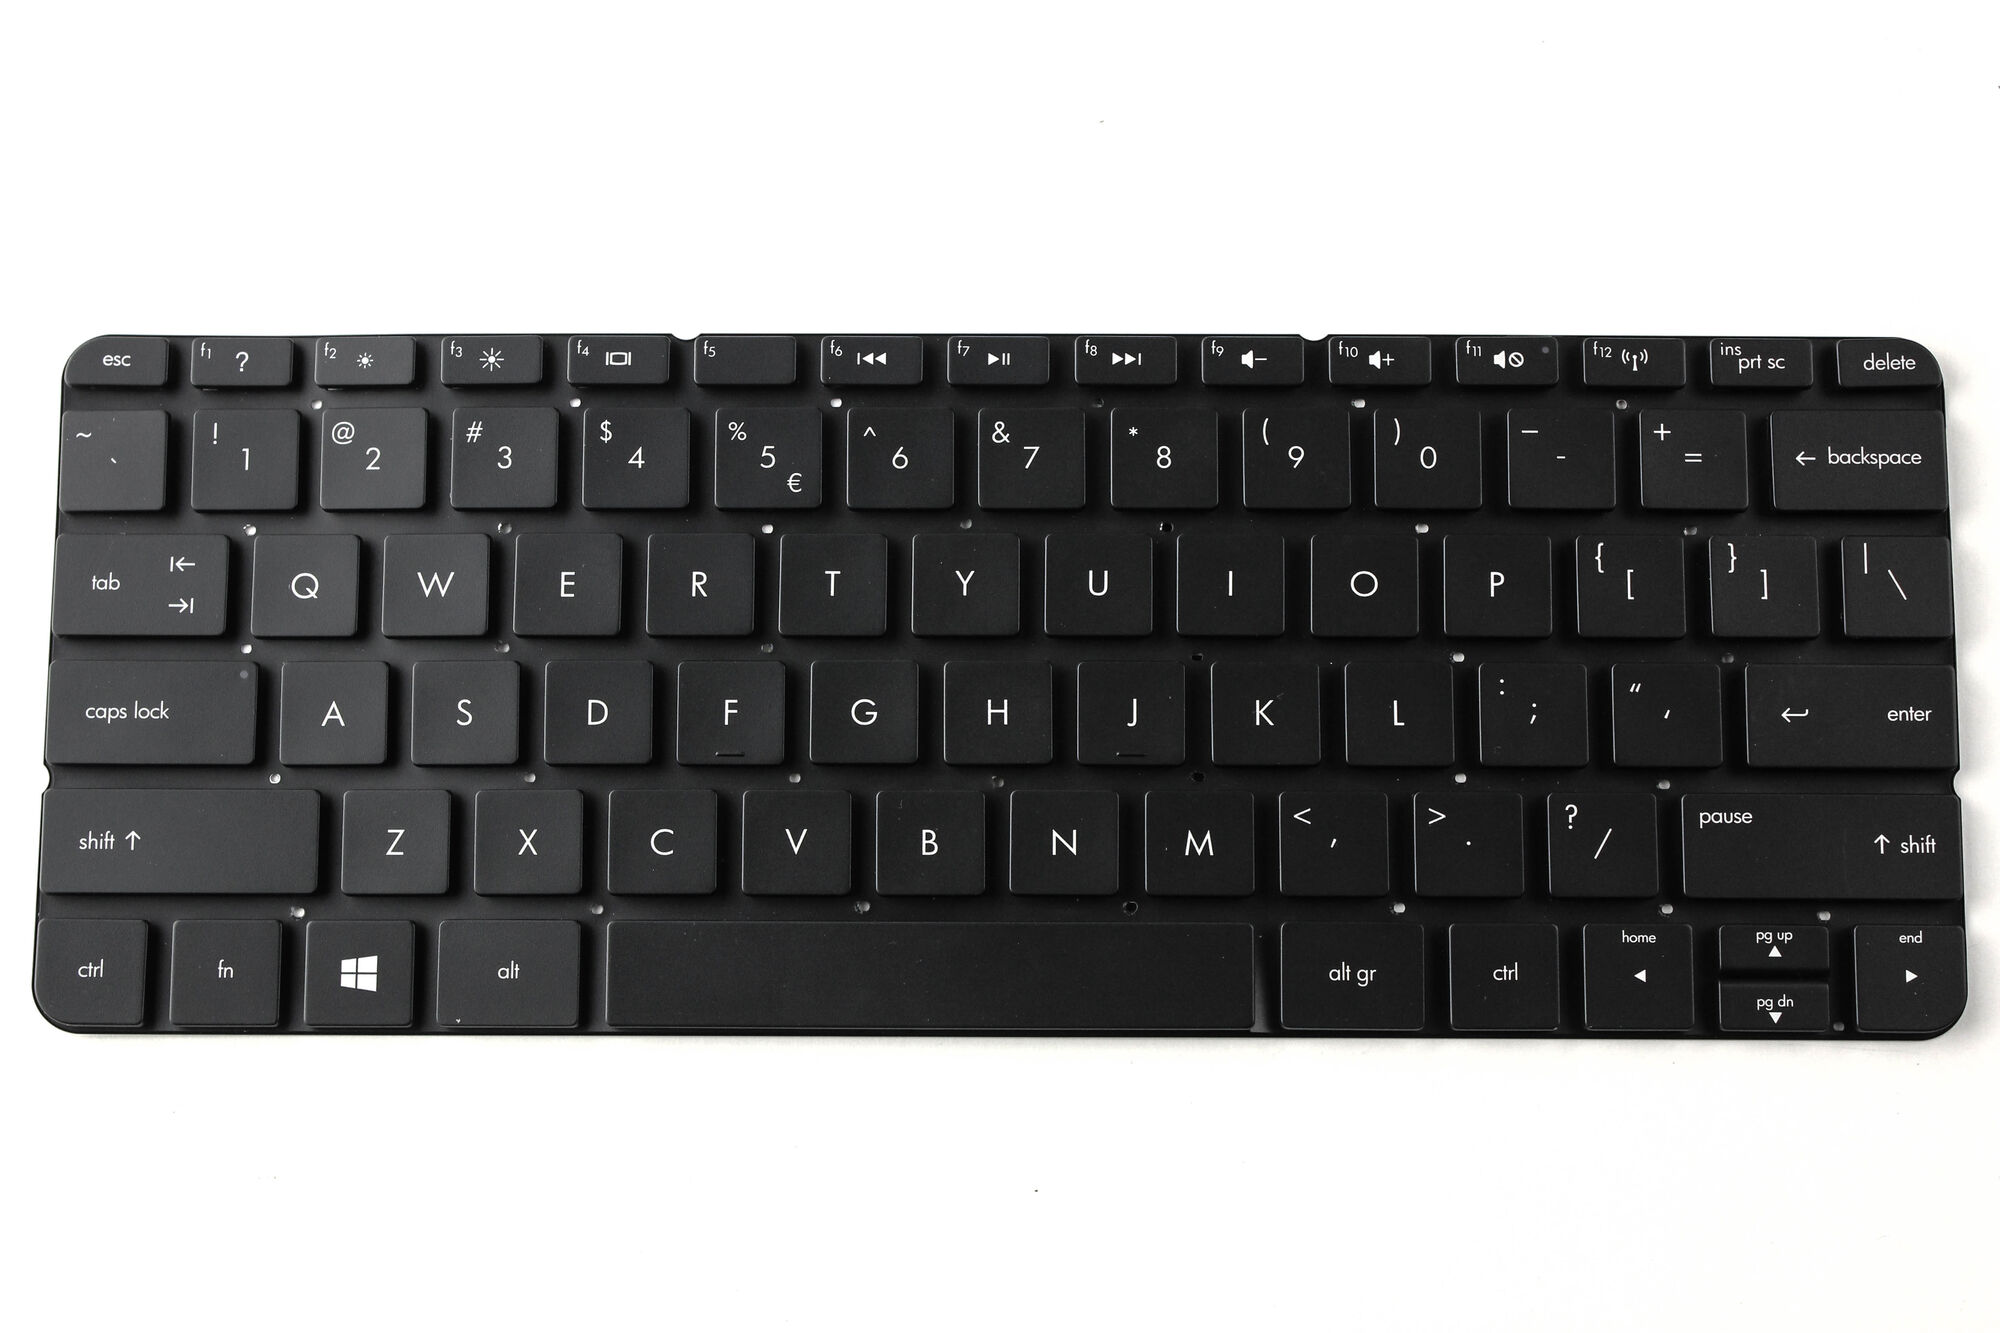 Клавиатура для HP ENVY X2 11-G Черная p/n: 0KNL-0N1RU19, 702369-251, 2B-06216PA00, 694497-251